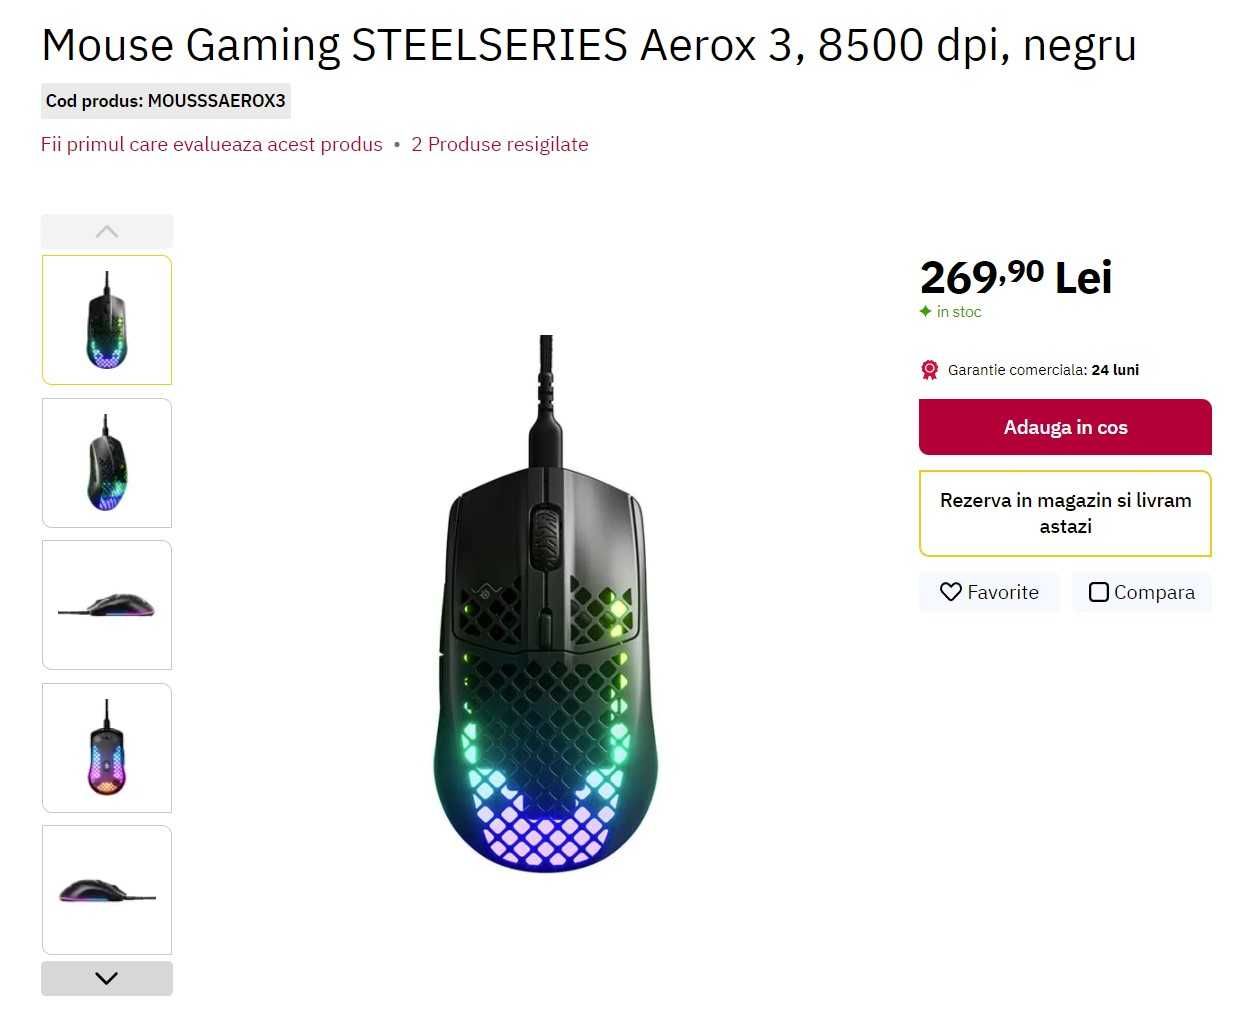 Mouse Gaming STEELSERIES Aerox 3, 8500 dpi, negru - nou nefolosit